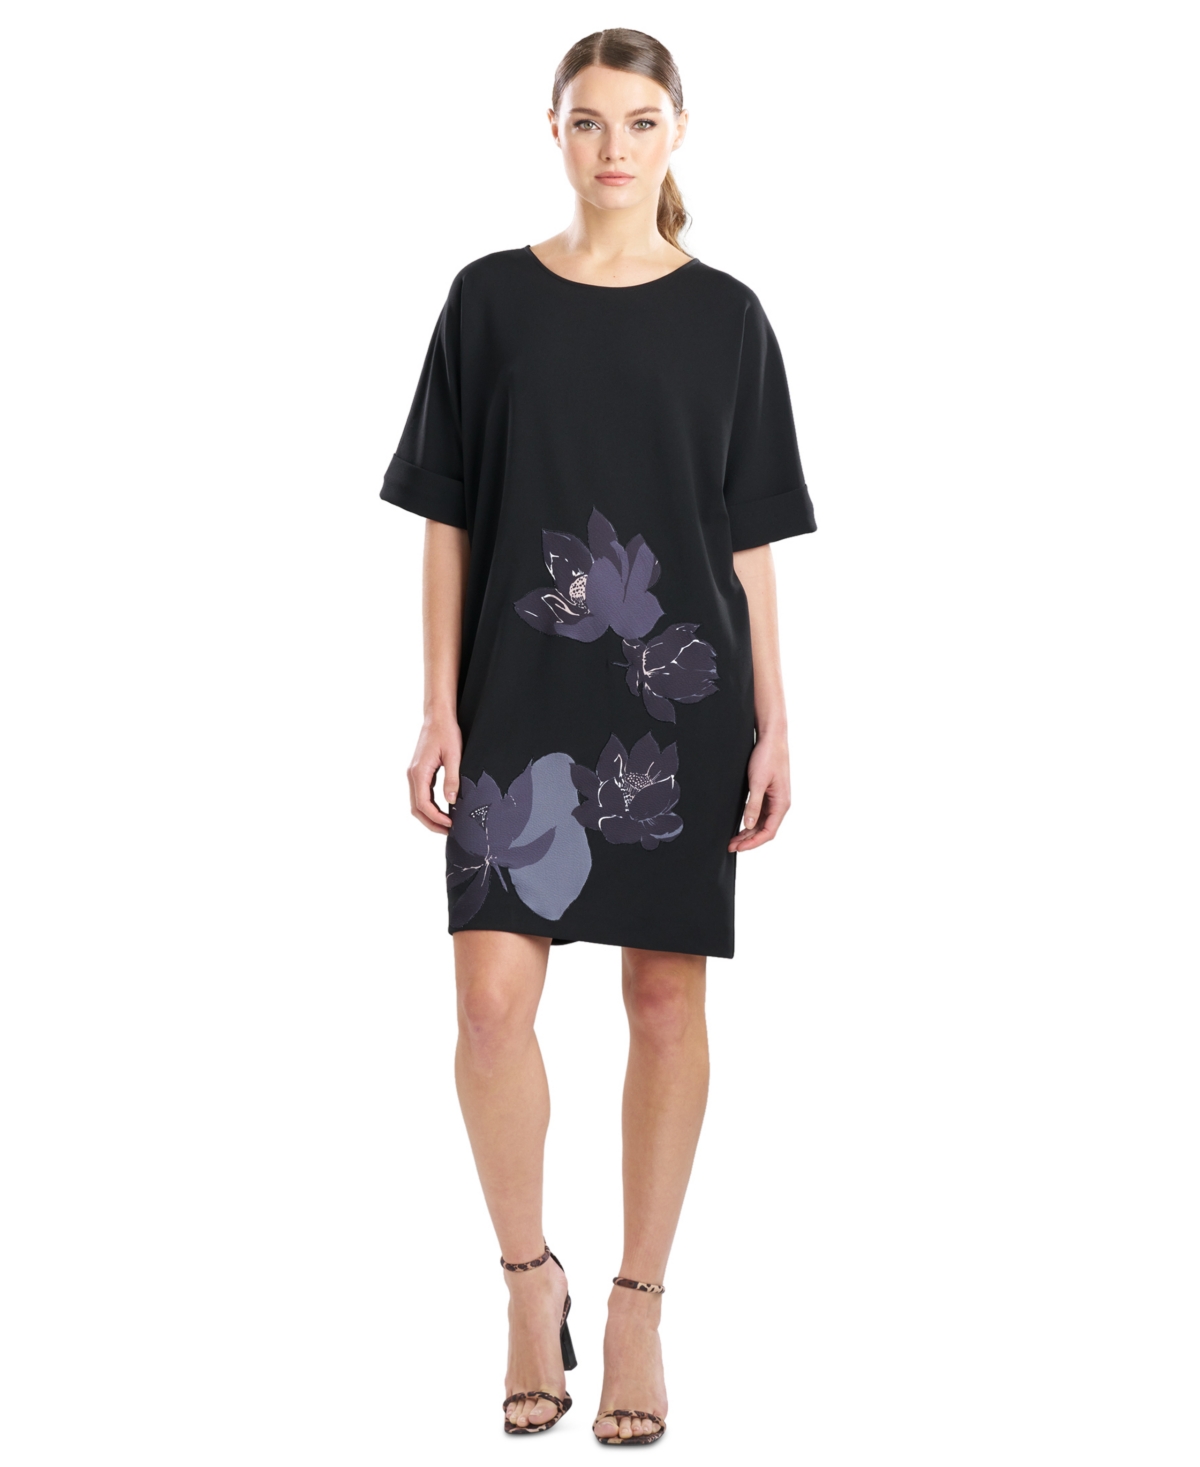 Women's Floral Round-Neck Short-Sleeve Dress - Black